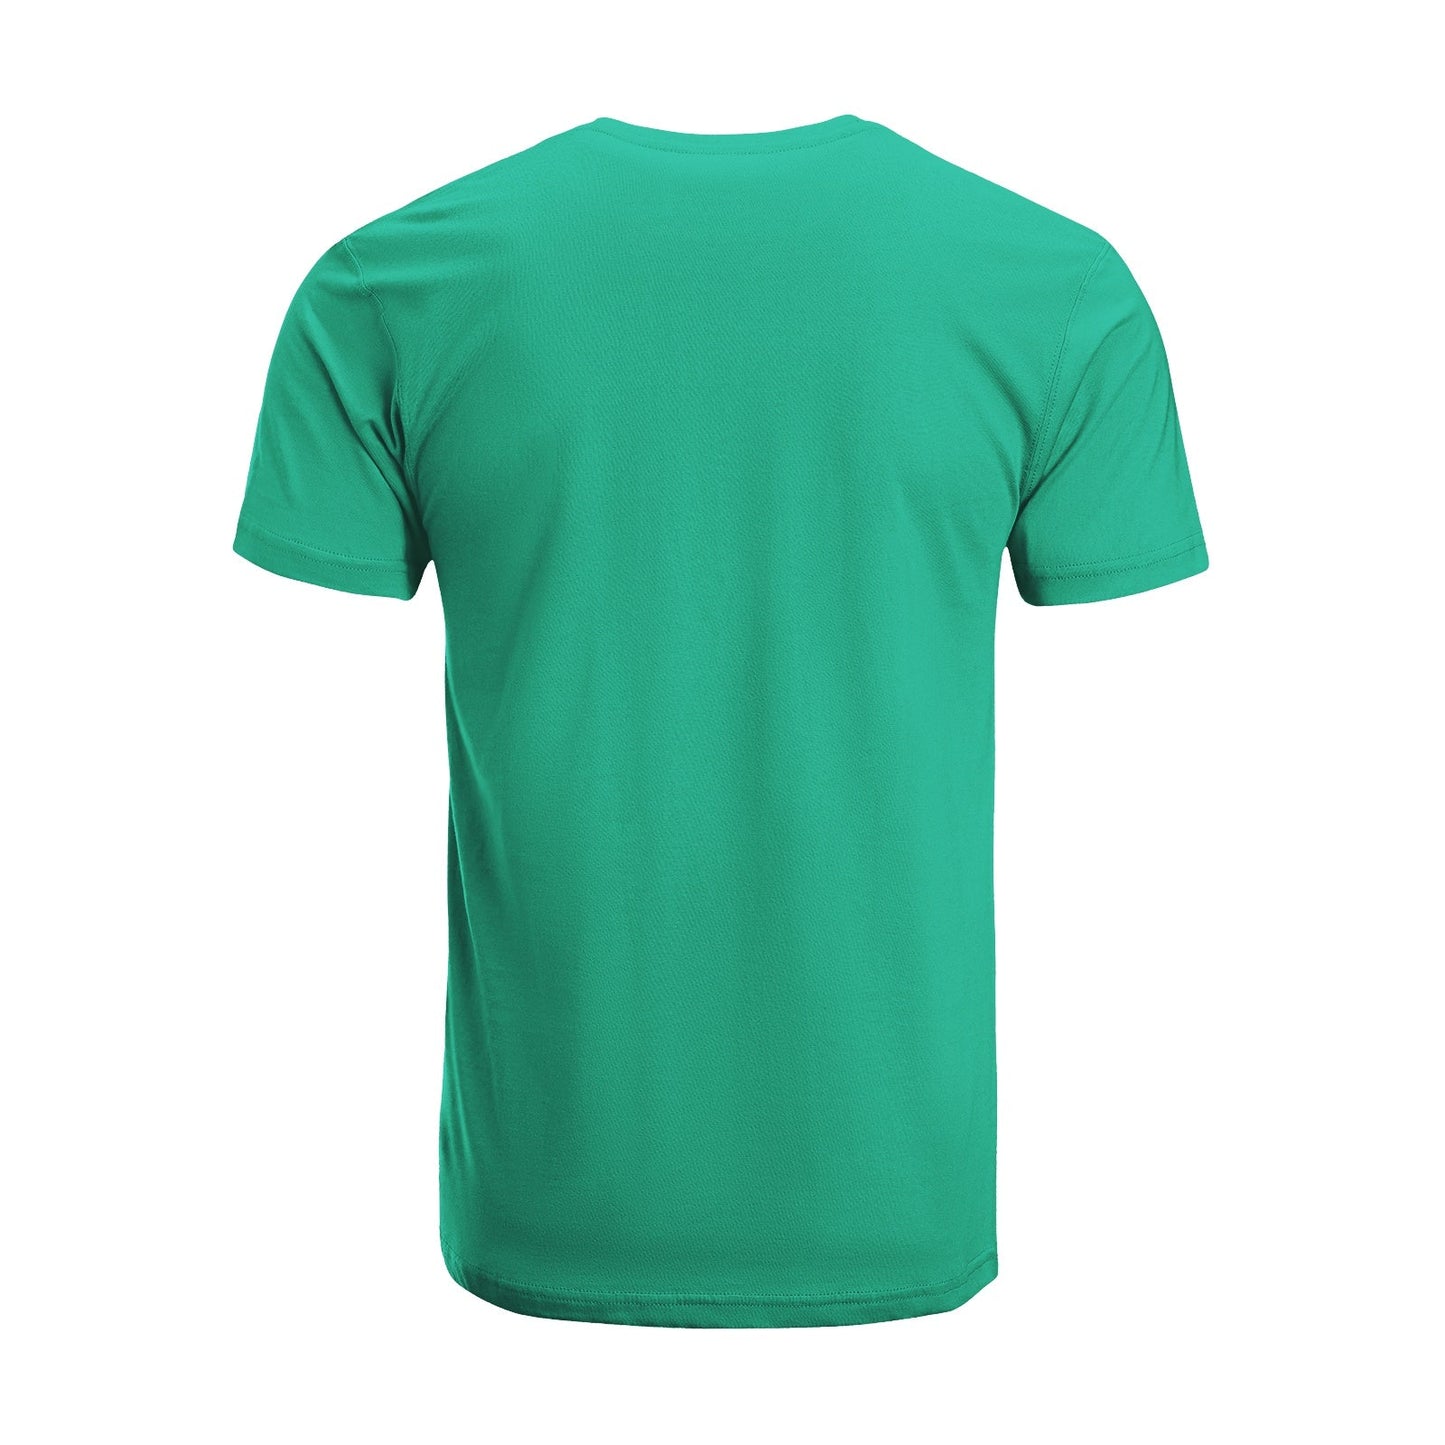 Unisex Short Sleeve Crew Neck Cotton Jersey T-Shirt MOM 12